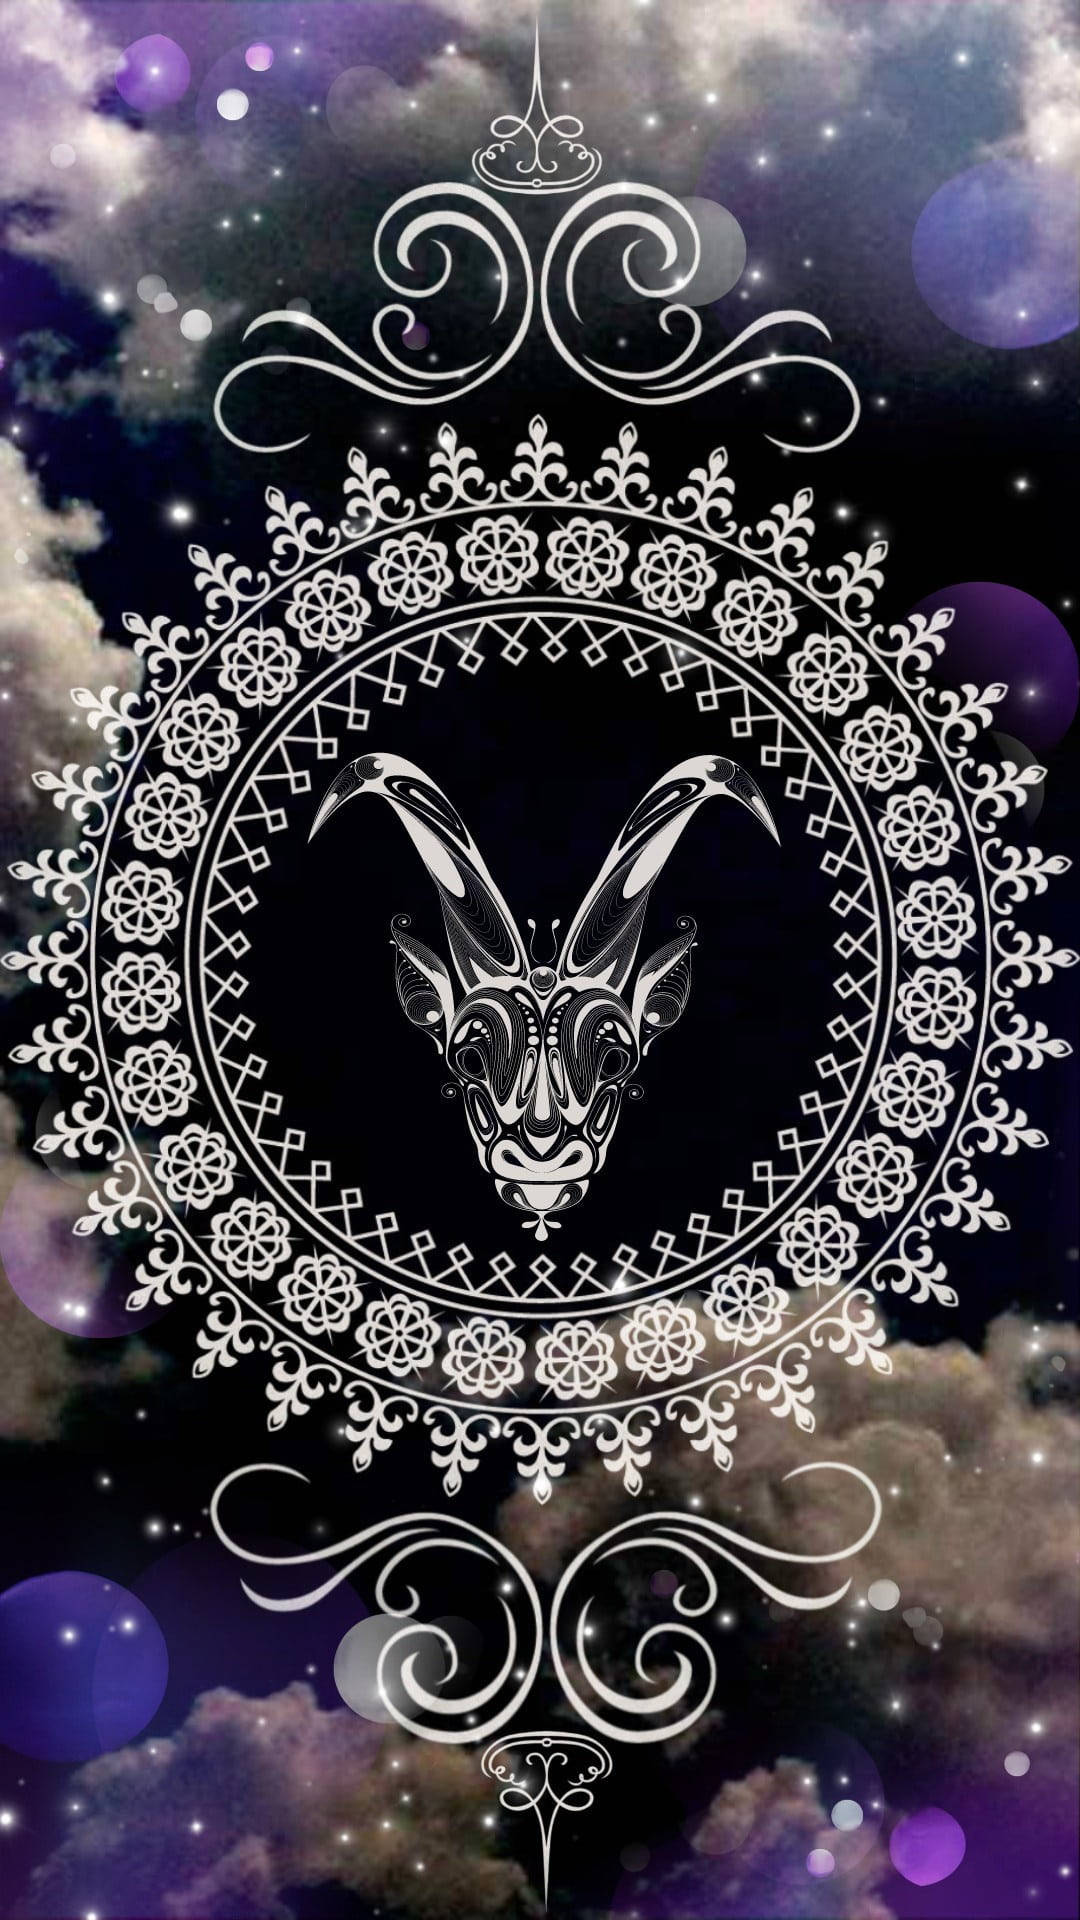 Caption: Artistic Capricorn Zodiac Mandala Design Background